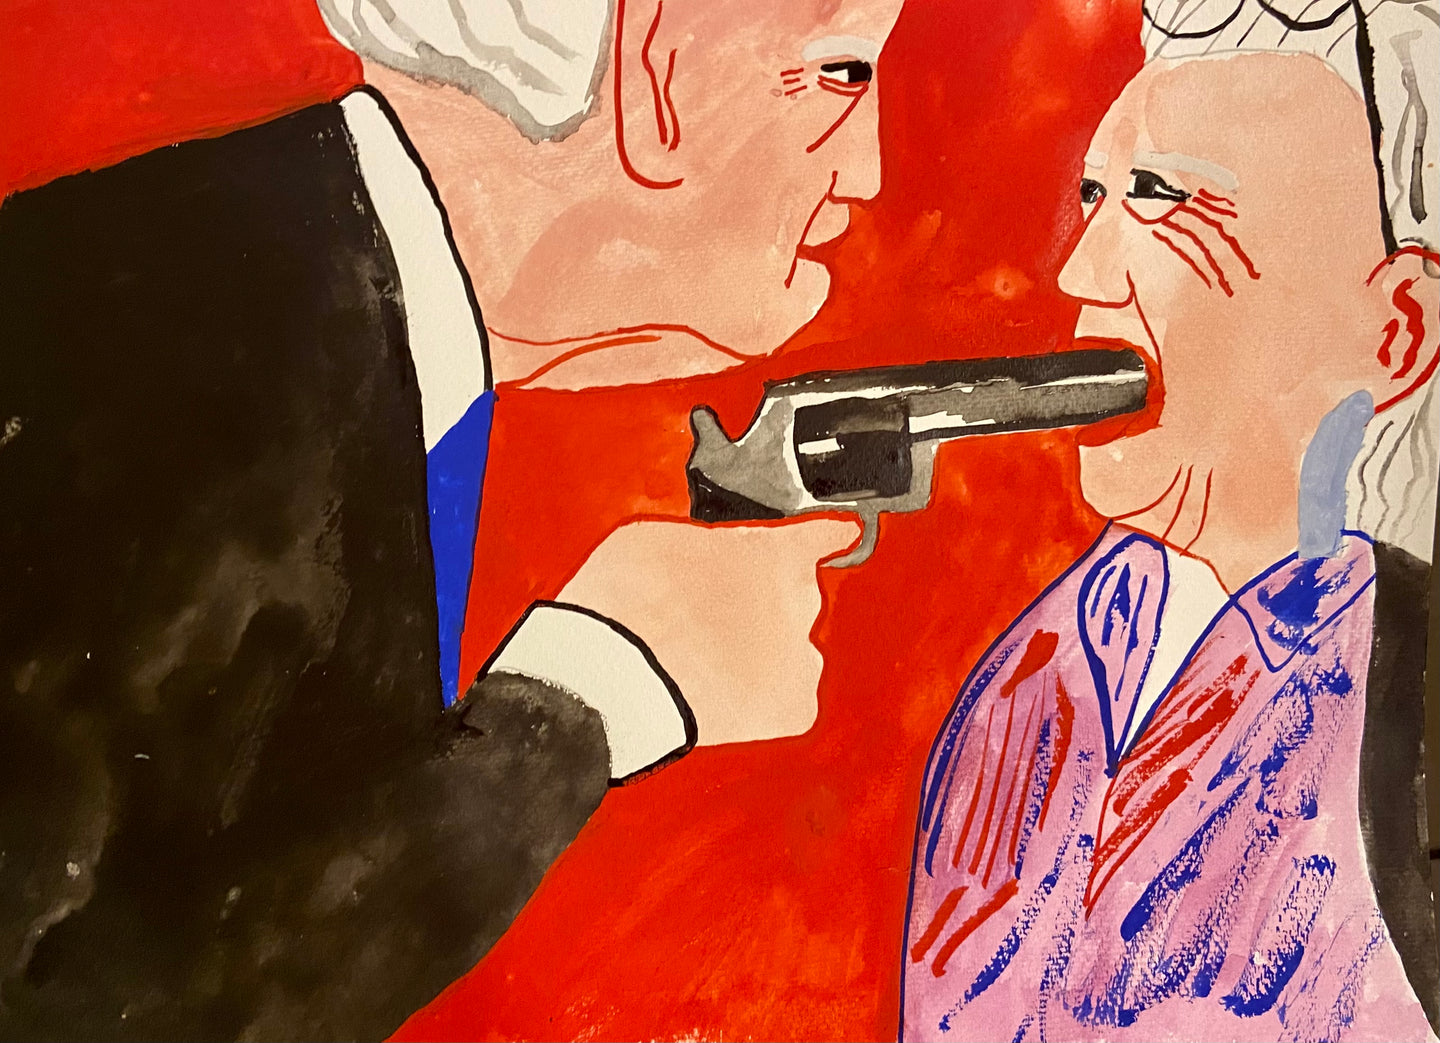 Joe Biden Putting Gun in Woman’s Mouth